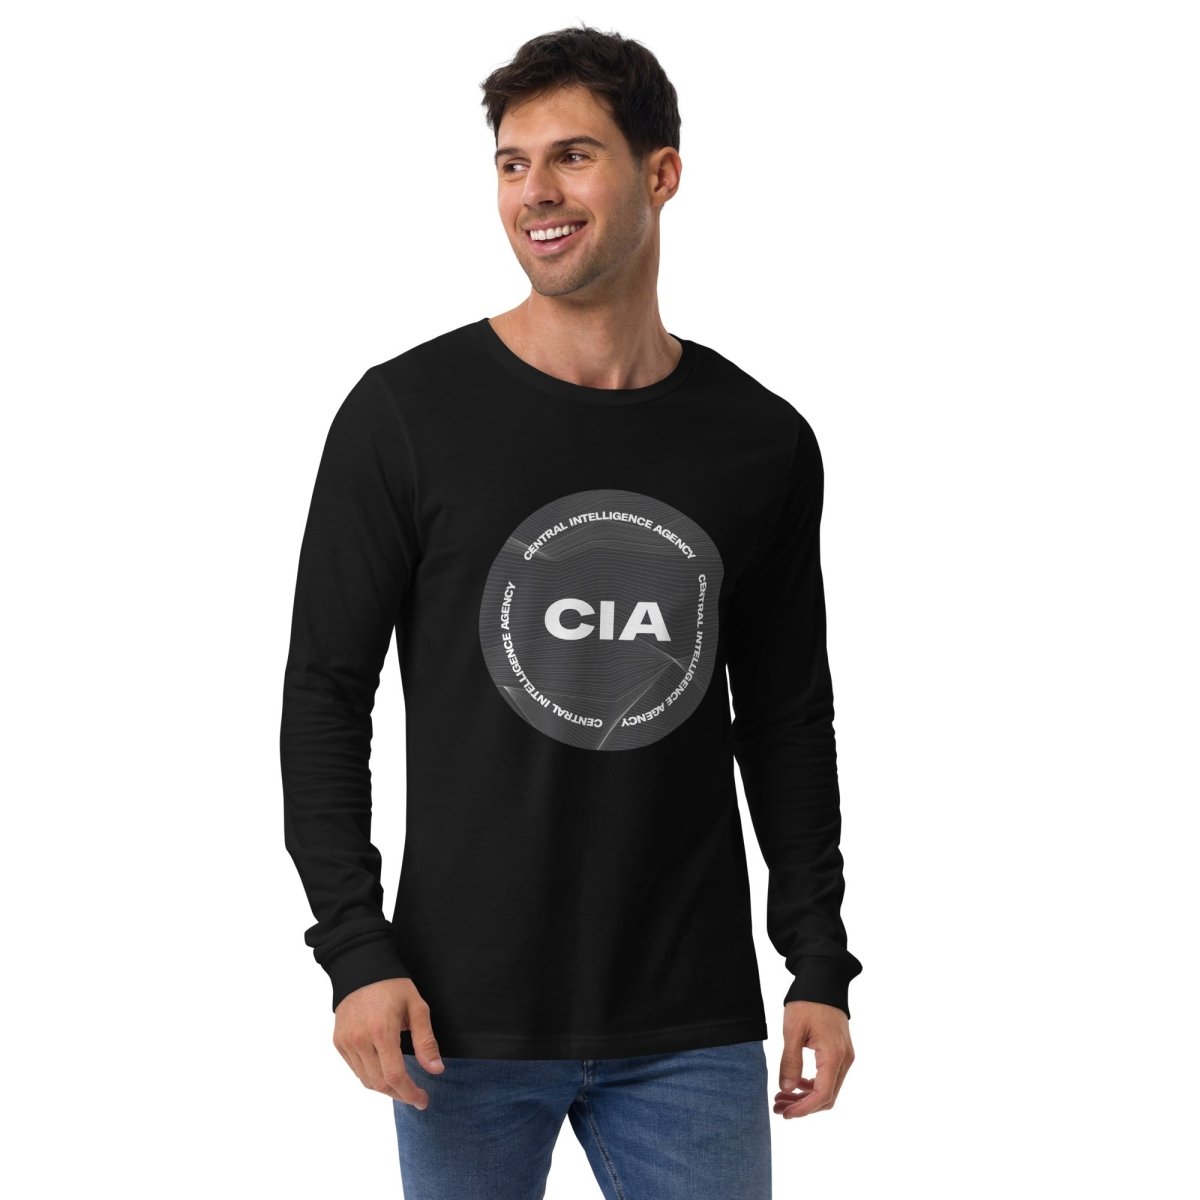 CIA 2021 Logo Long Sleeve T - Shirt (unisex) - Black - AI Store